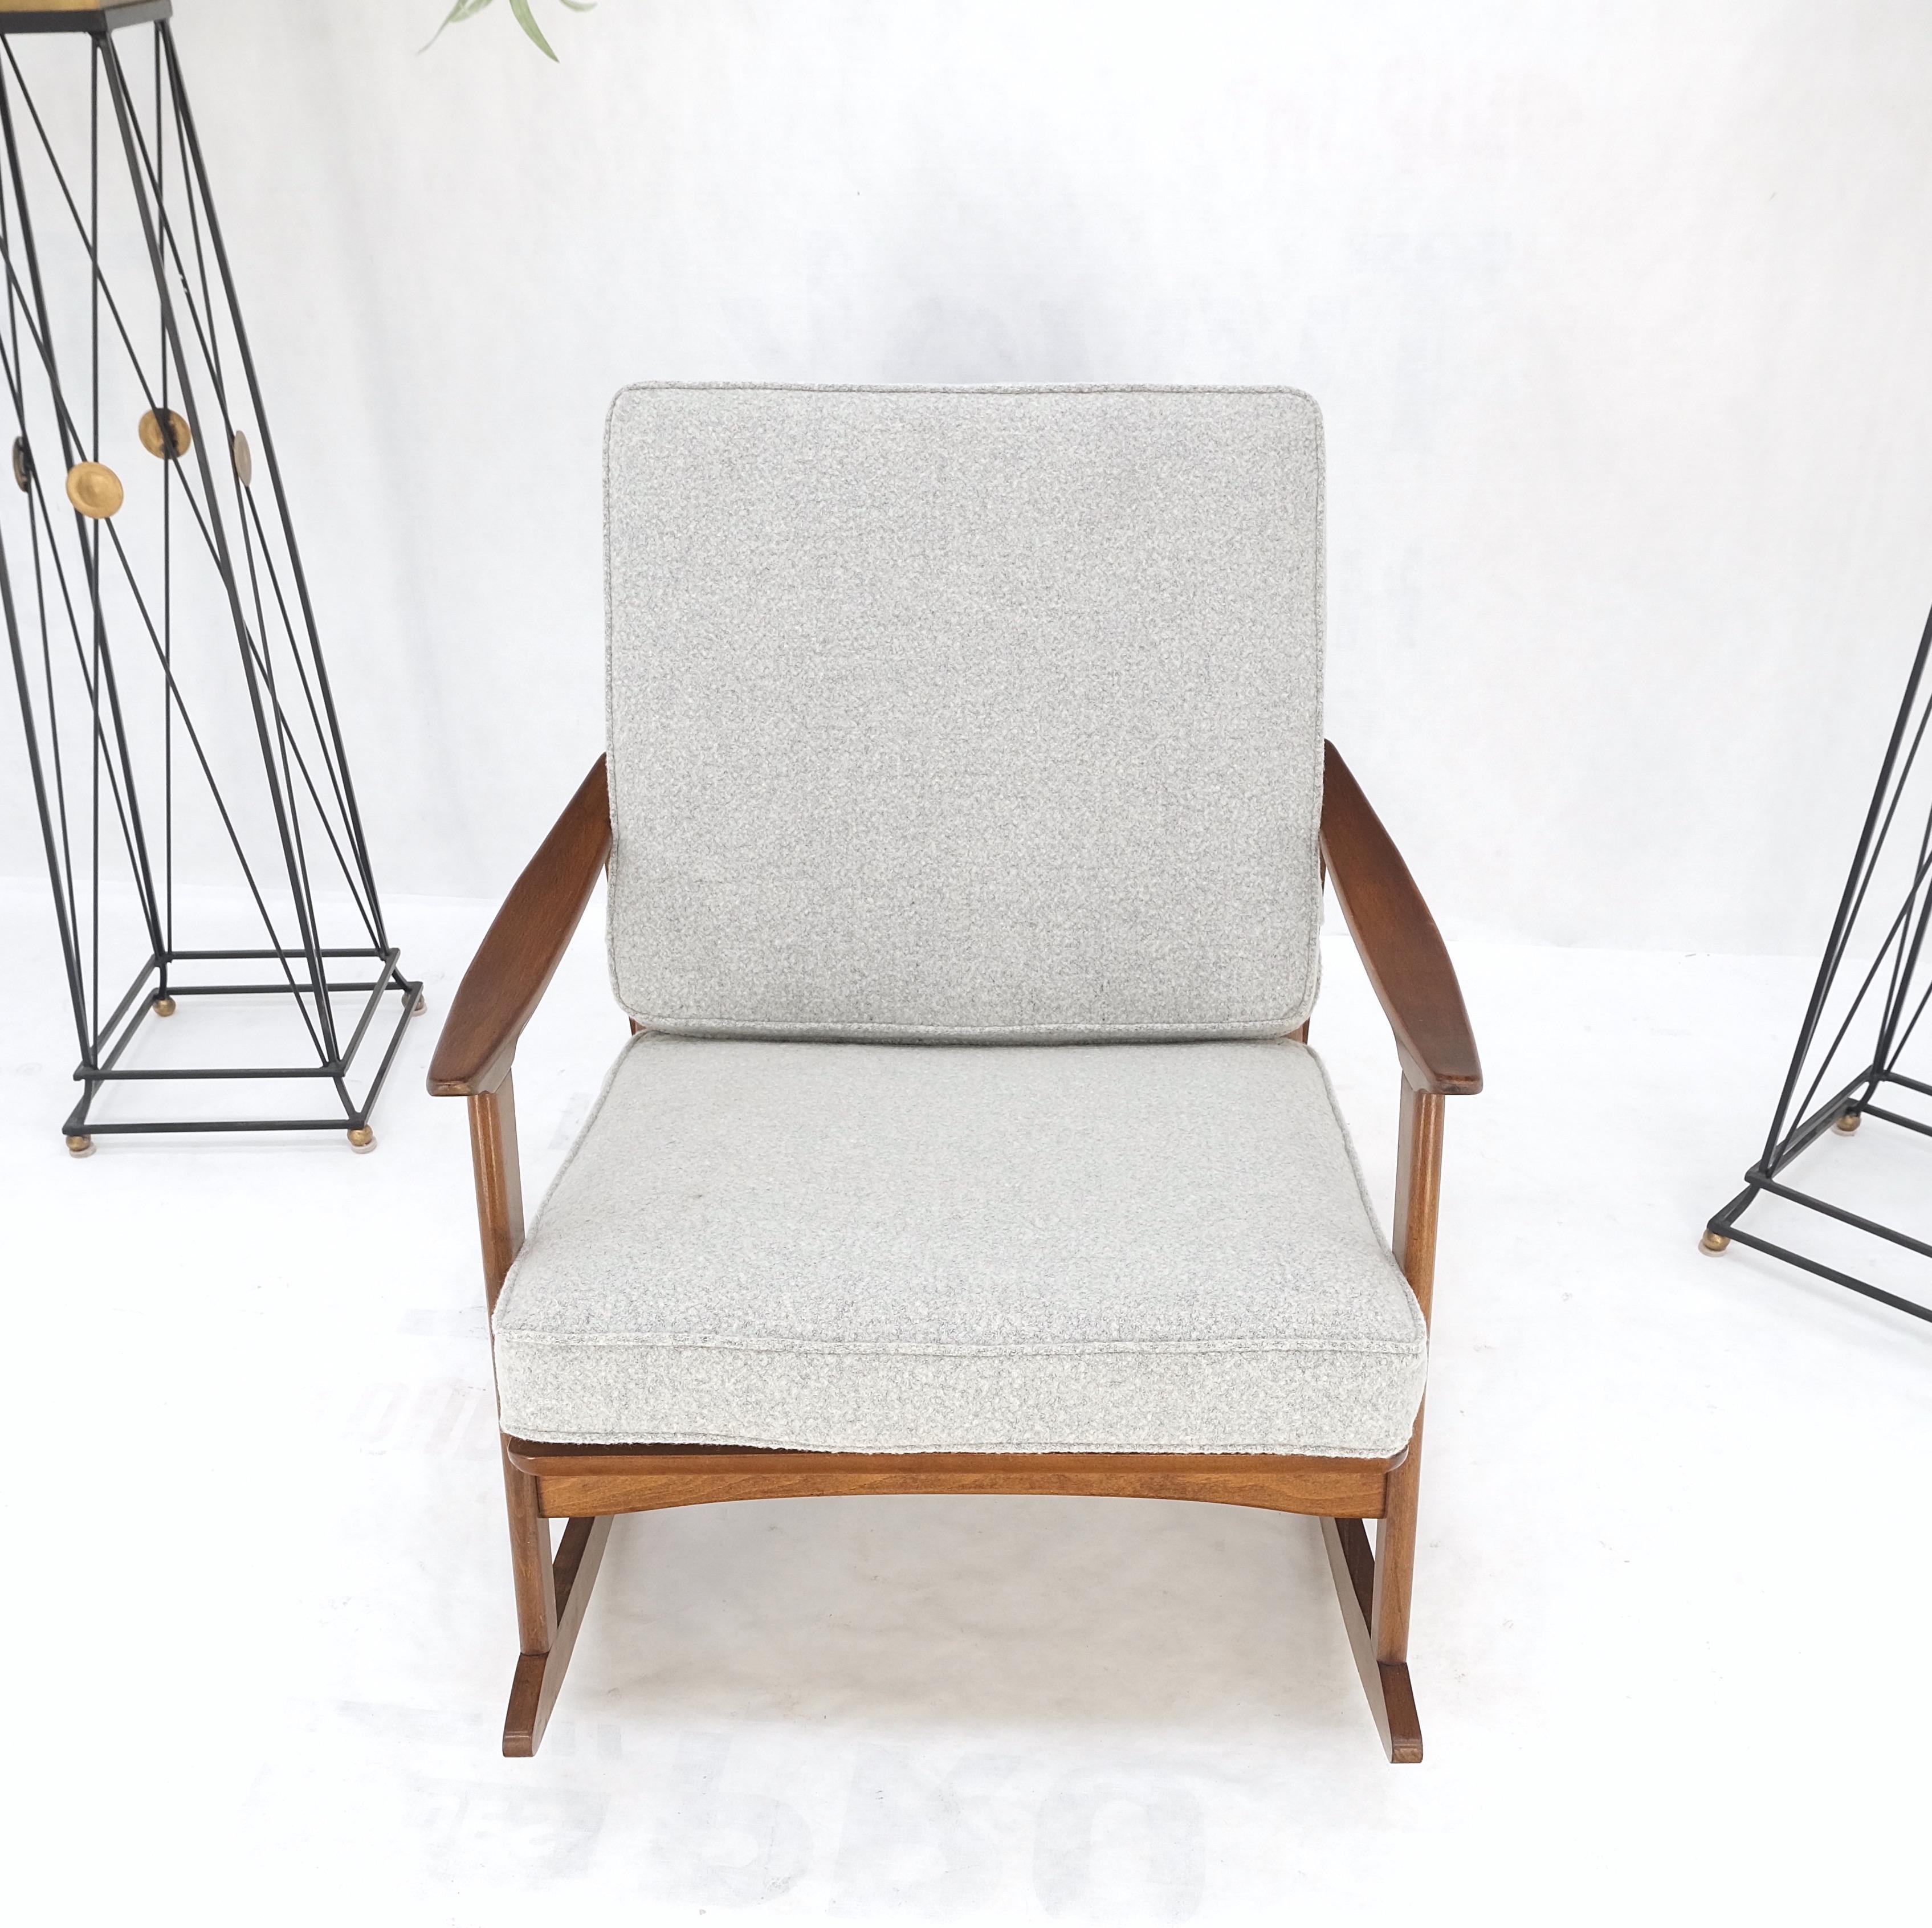 Danish Mid-Century Modern New Grey Wool Upholstery Rocking Lounge Chair MINT!